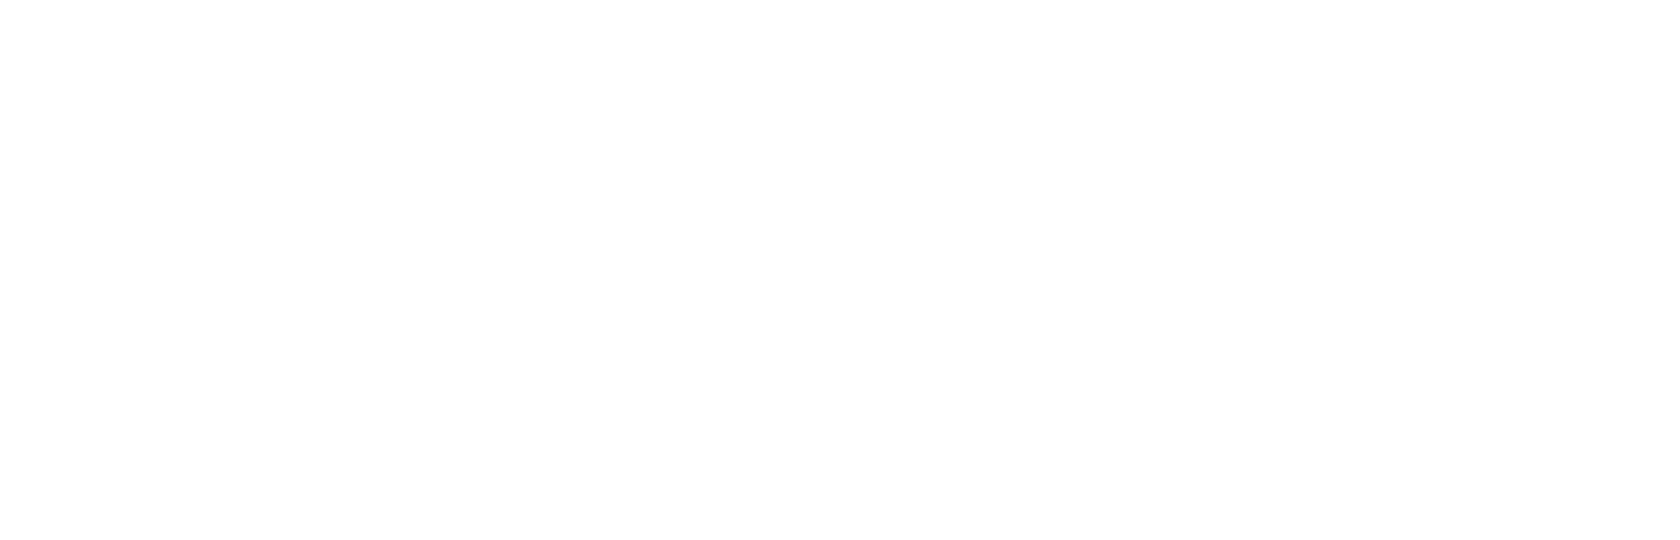 Karavaeva TV